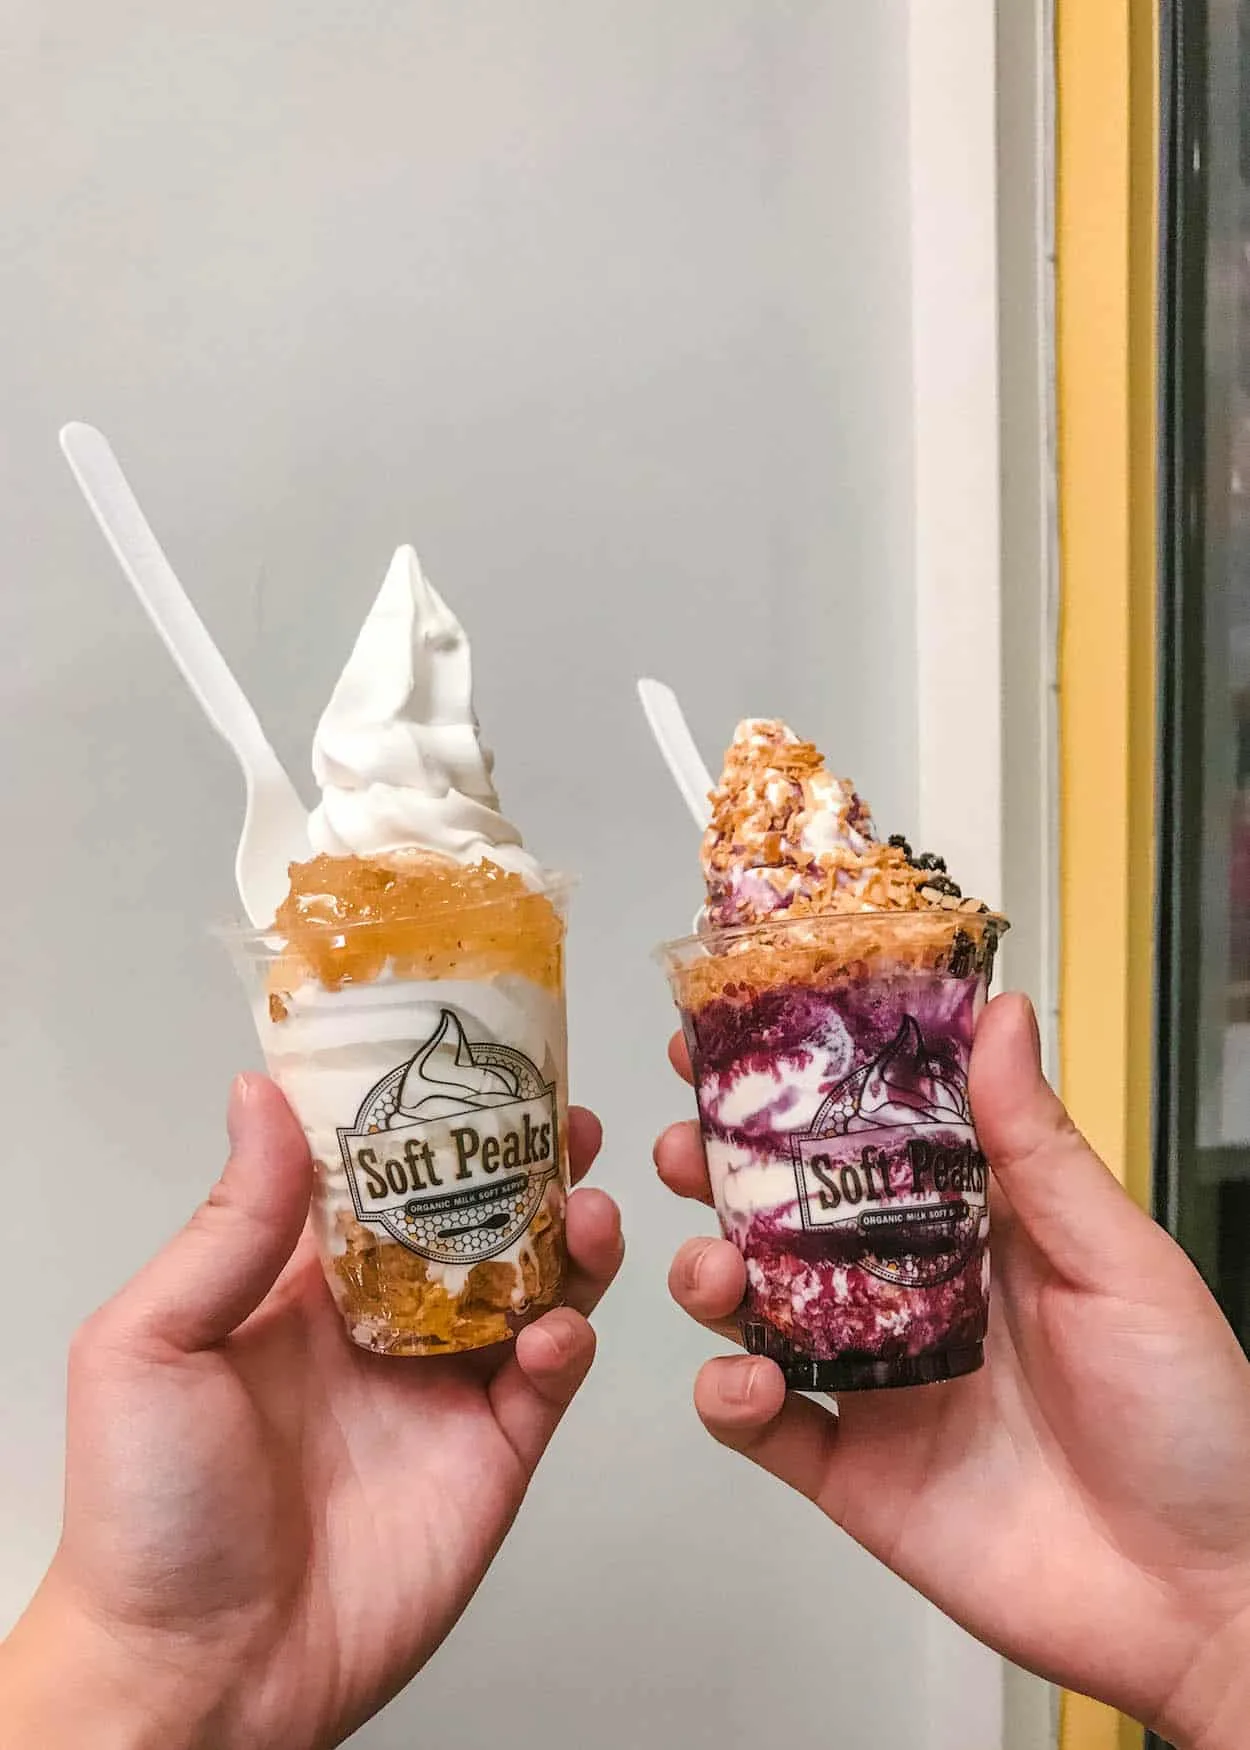 Soft Peaks Ice Cream in Gastown, Vancouver, British Columbia